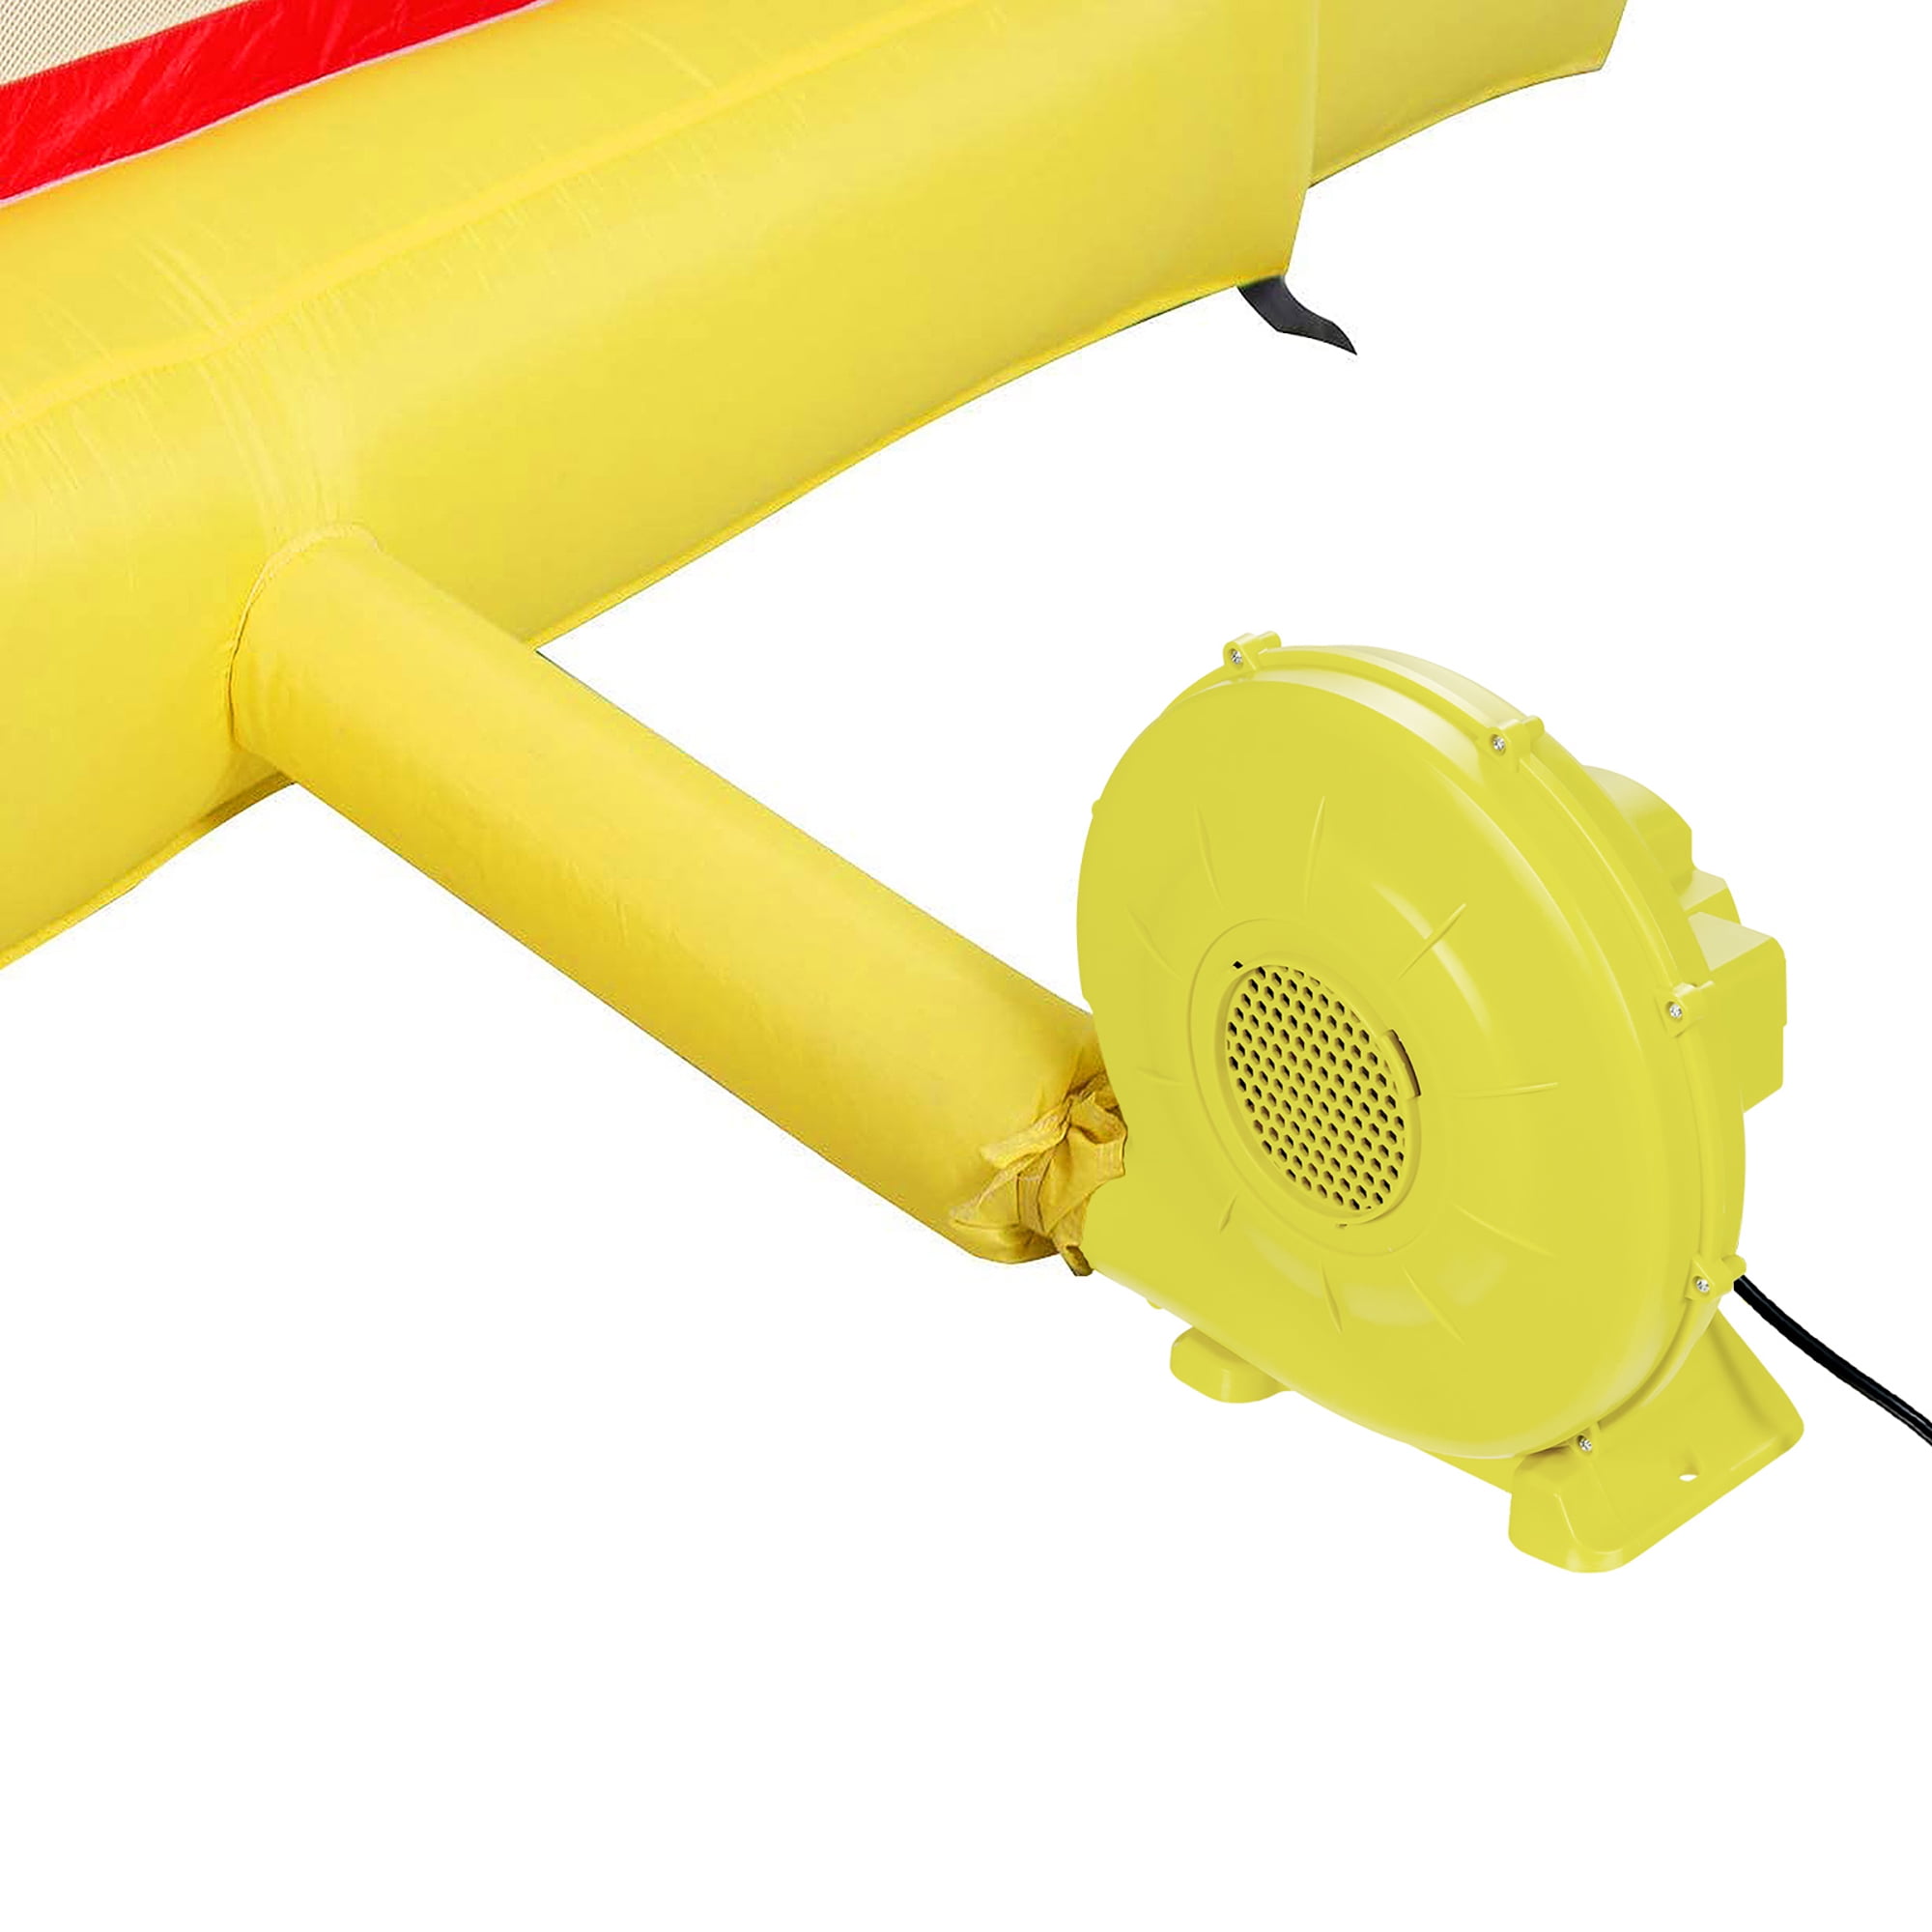 Costway Air Blower Pump Fan 350 Watt 0.5 HP for Inflatable Bounce